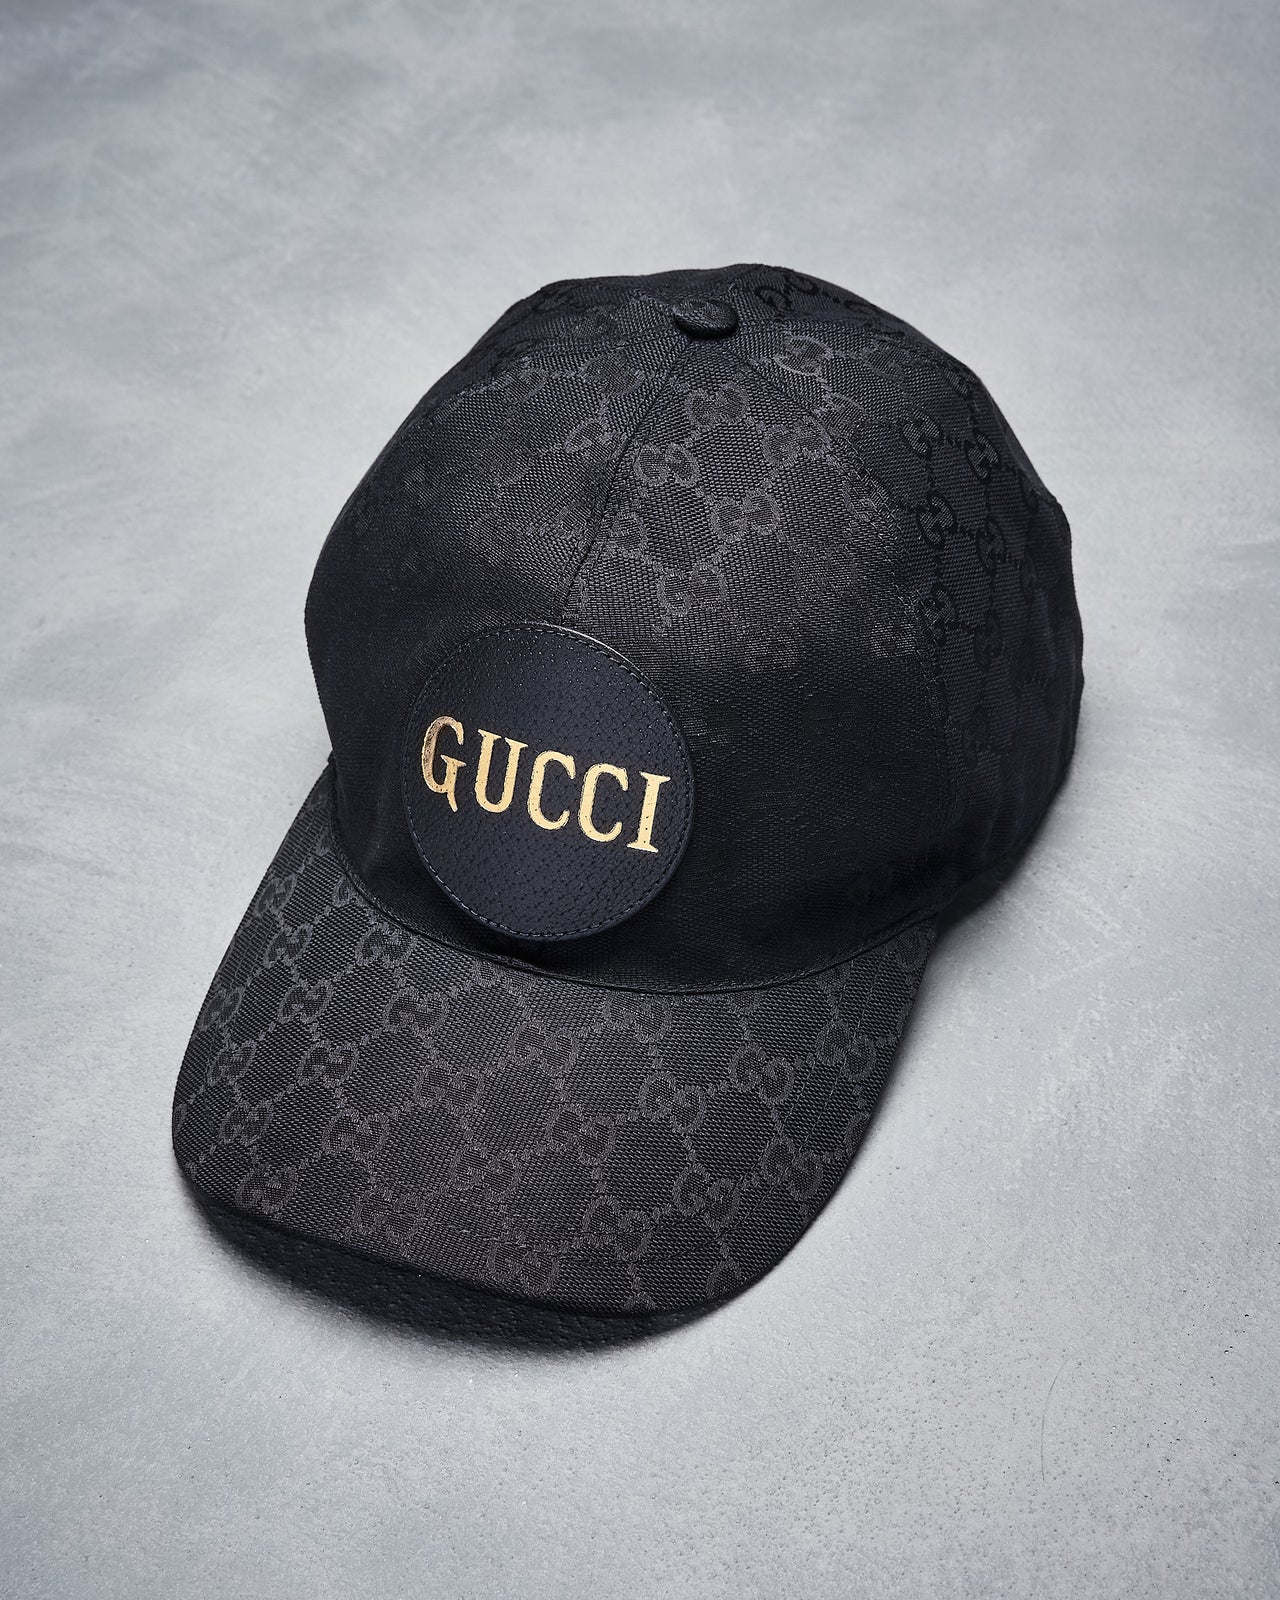 Gucci Interlocking GG leather patch cap